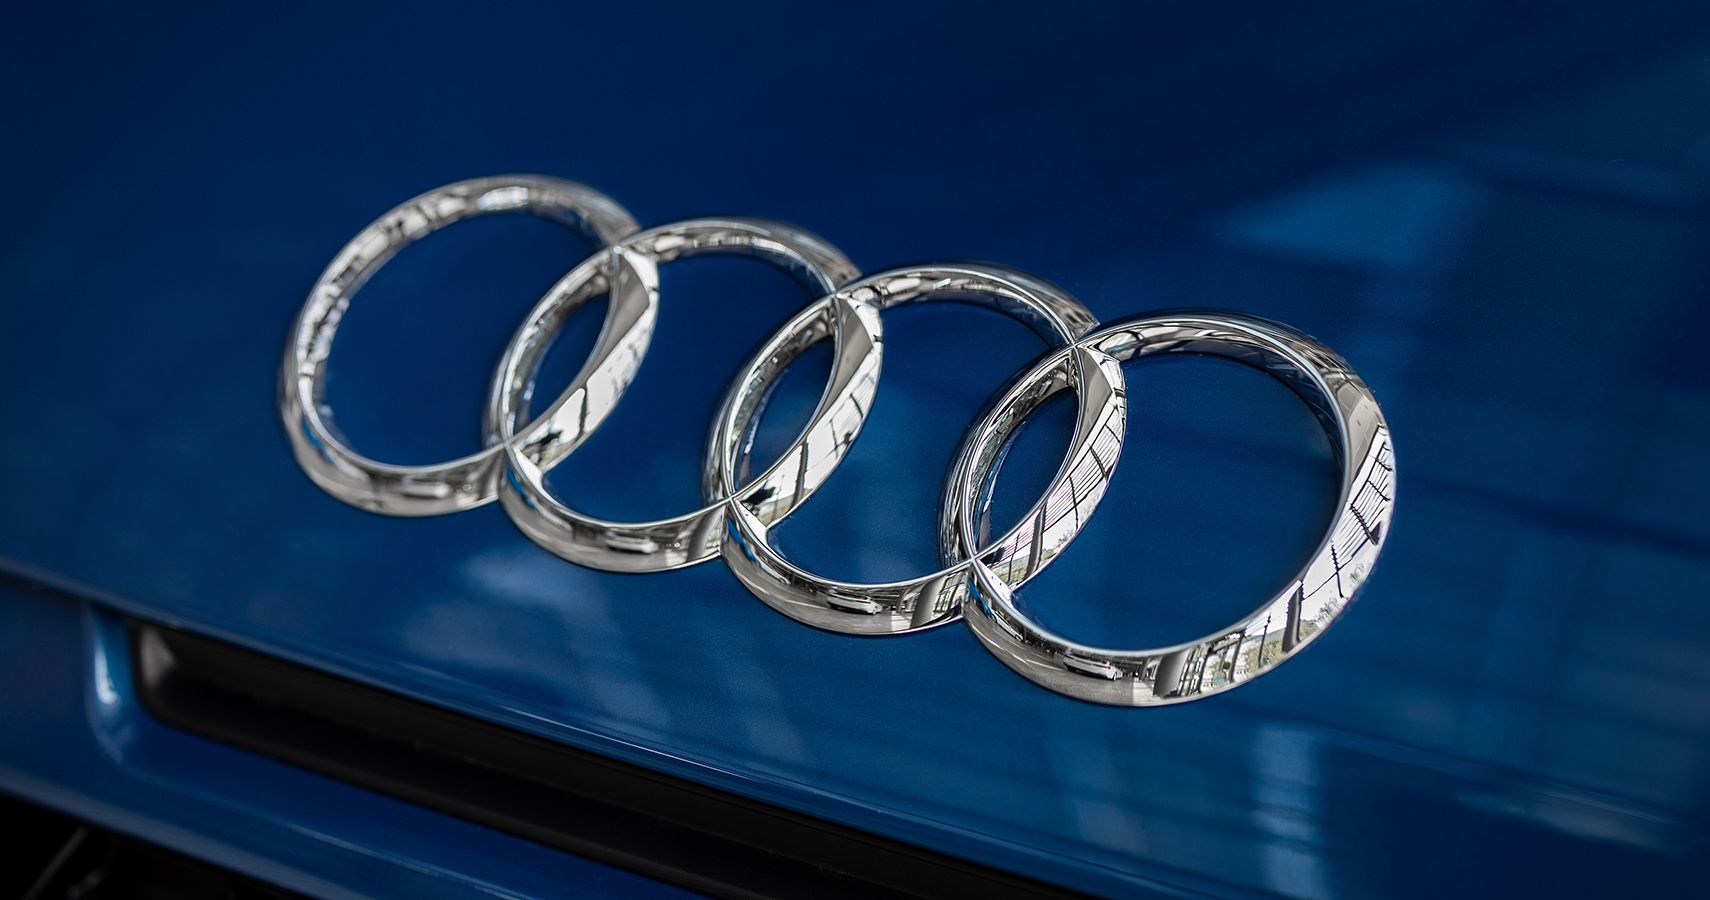 Audi Rings Emblem (Chrome): RACCAR Automotive